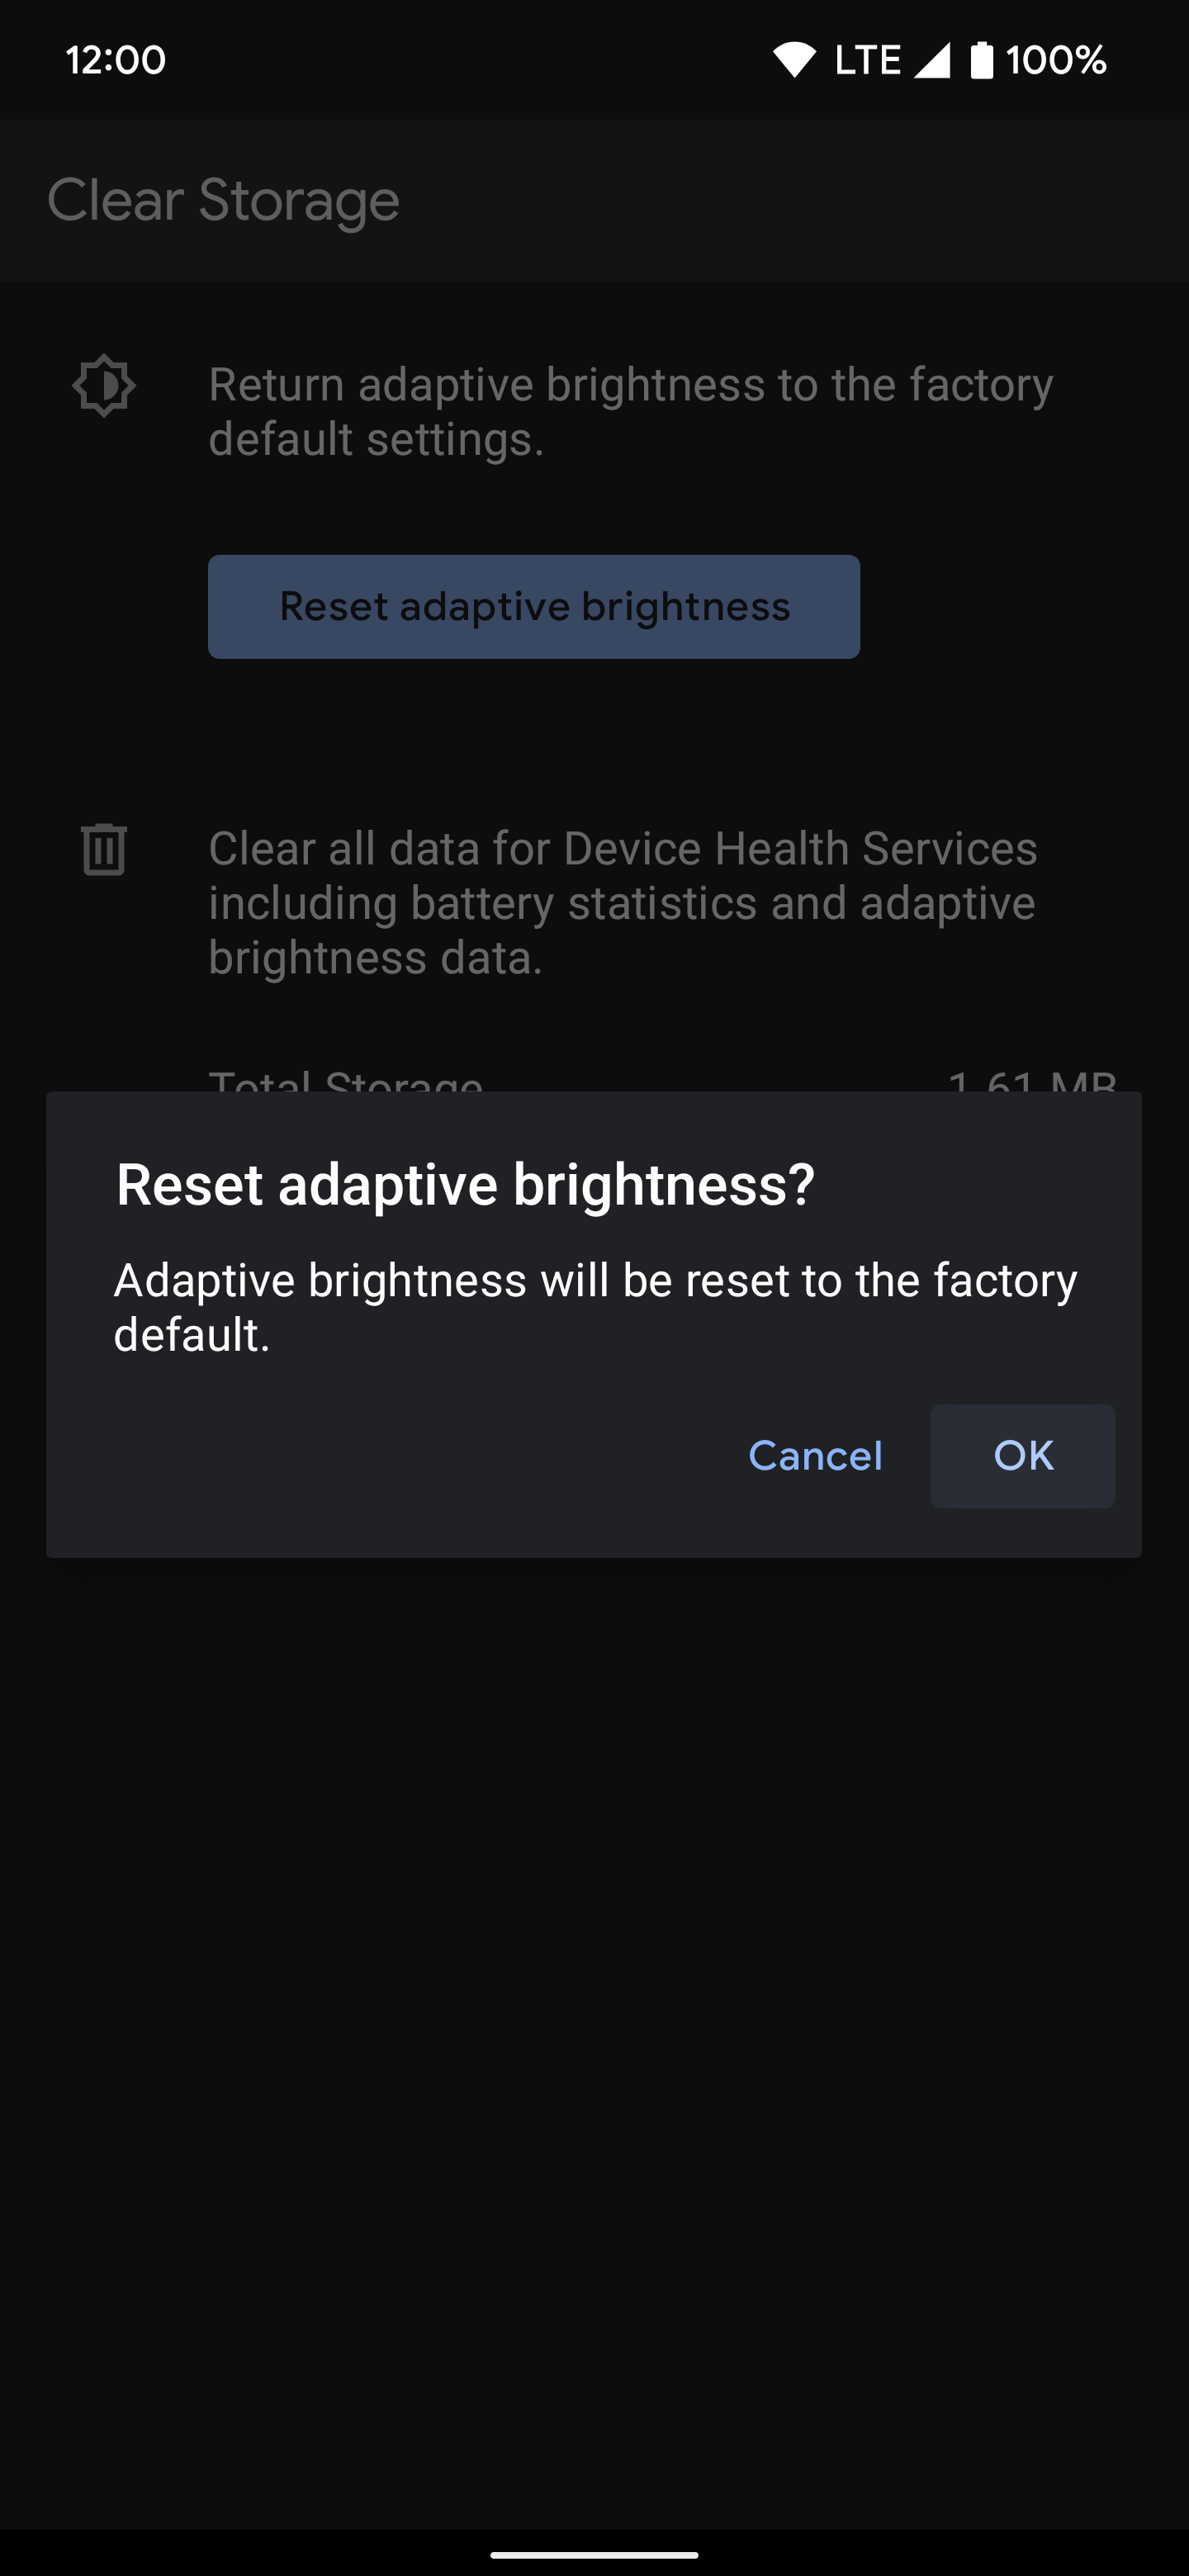 Reset Adaptive Brightness confirmation pop up